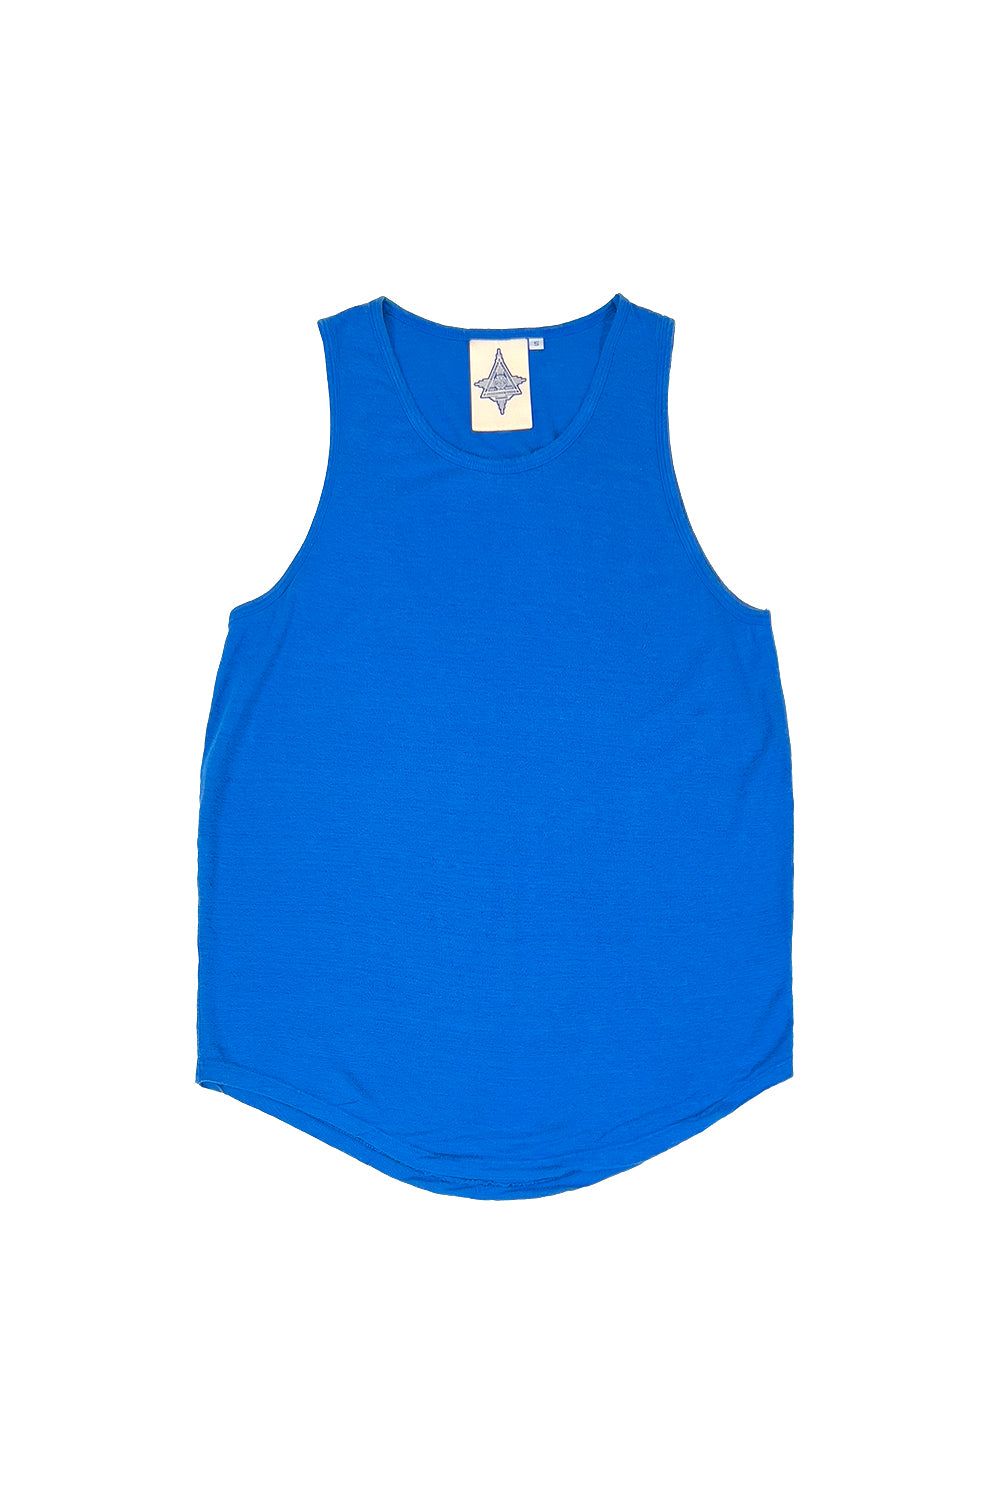 Playa 100% Tank Top | Jungmaven Hemp Clothing & Accessories / Color: Galaxy Blue